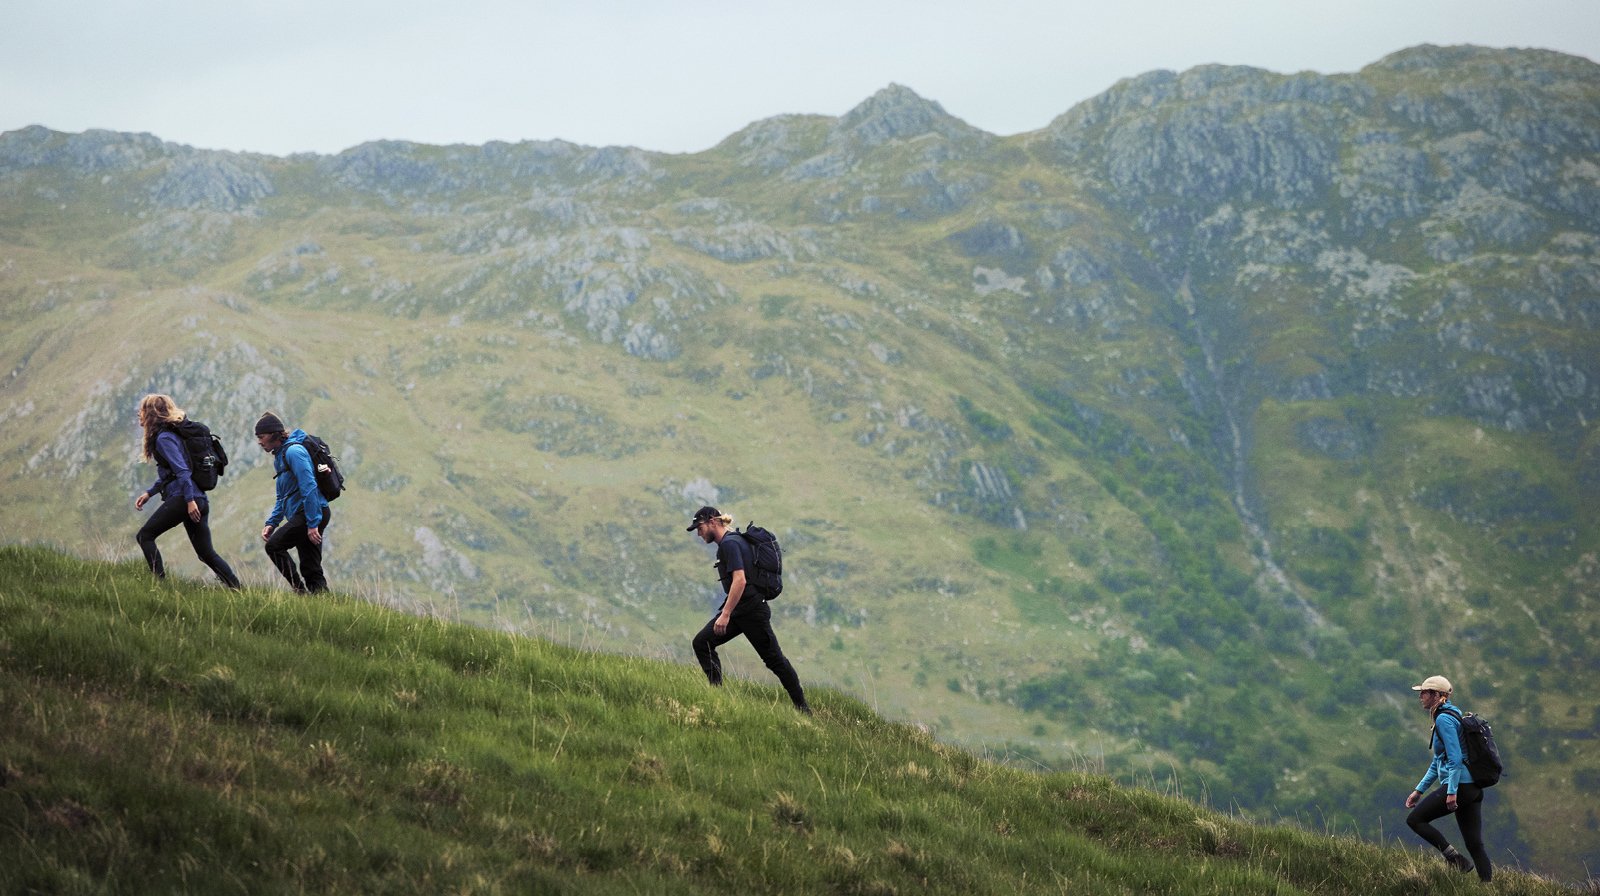 Berghaus athletes ascend a steep hill